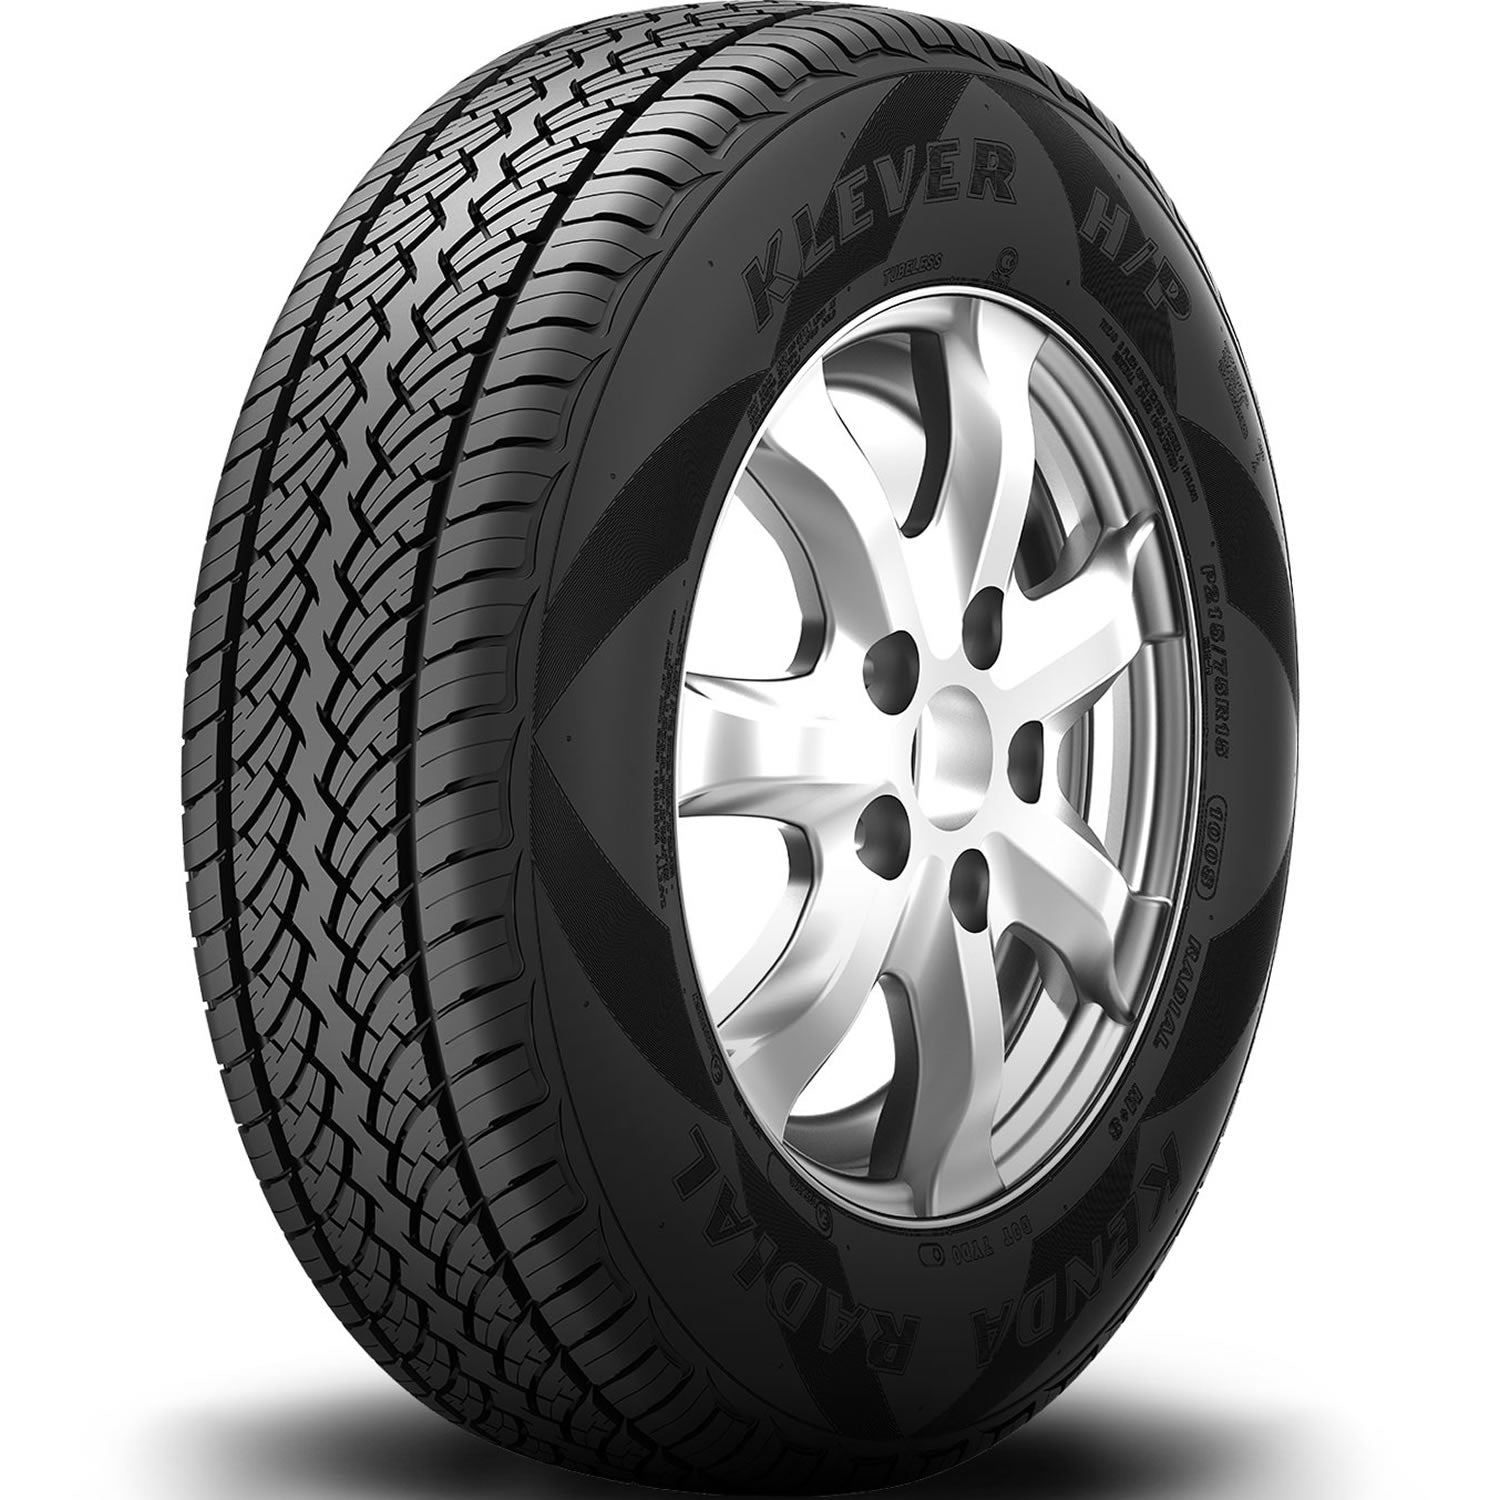 KENDA KLEVER HP P275/65R17 (31.1X10.9R 17) Tires